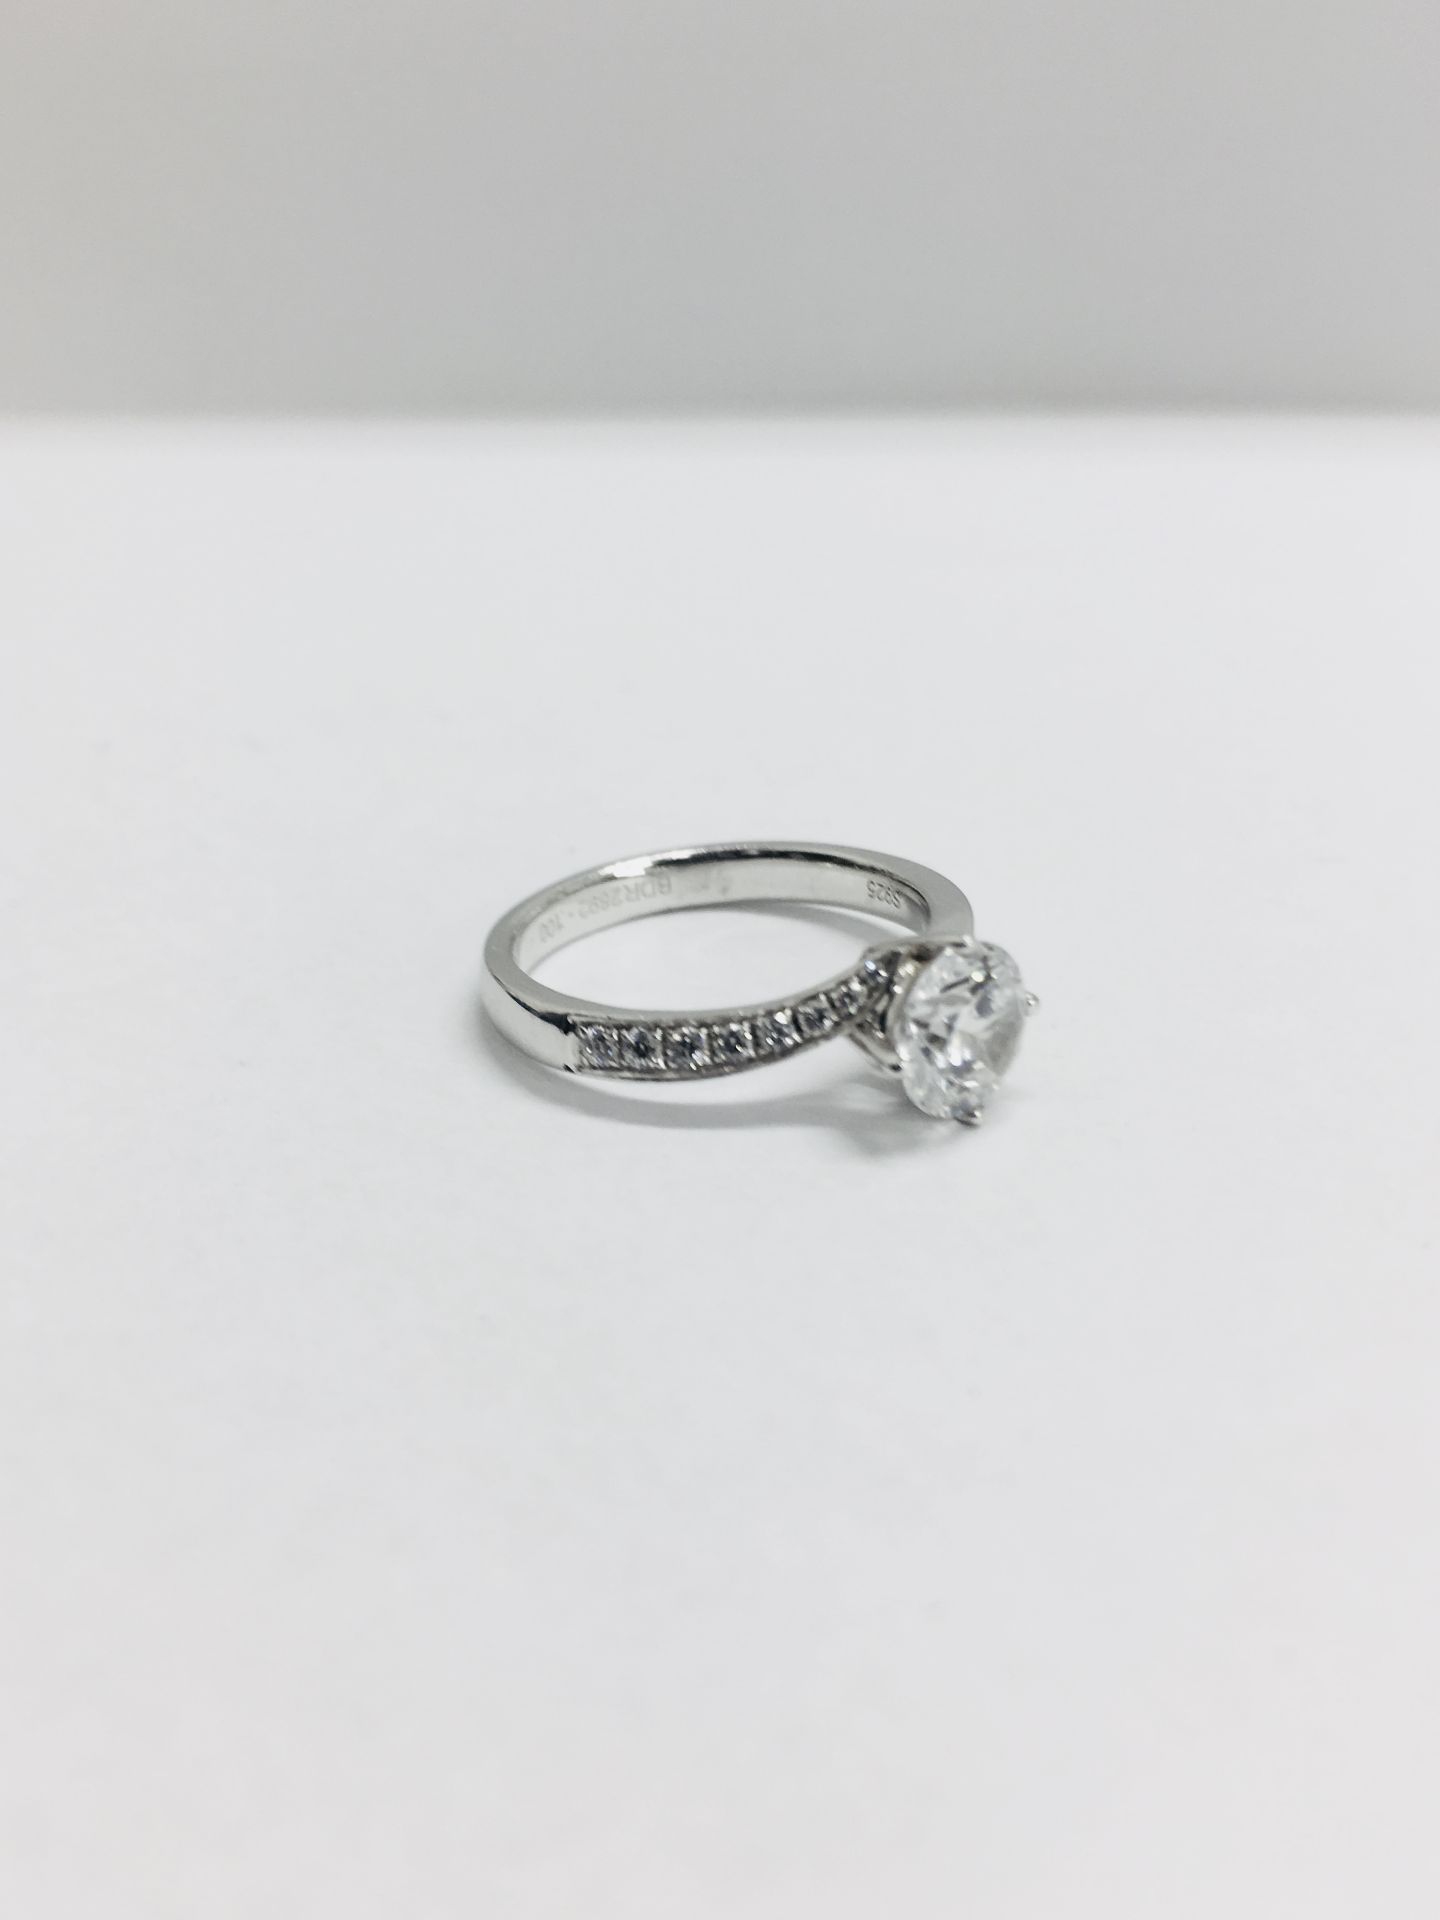 Platinum diamond solitaire ring ,0.50ct vvs1 clarity F colour natural brilliant cut diamond,3. - Image 4 of 7